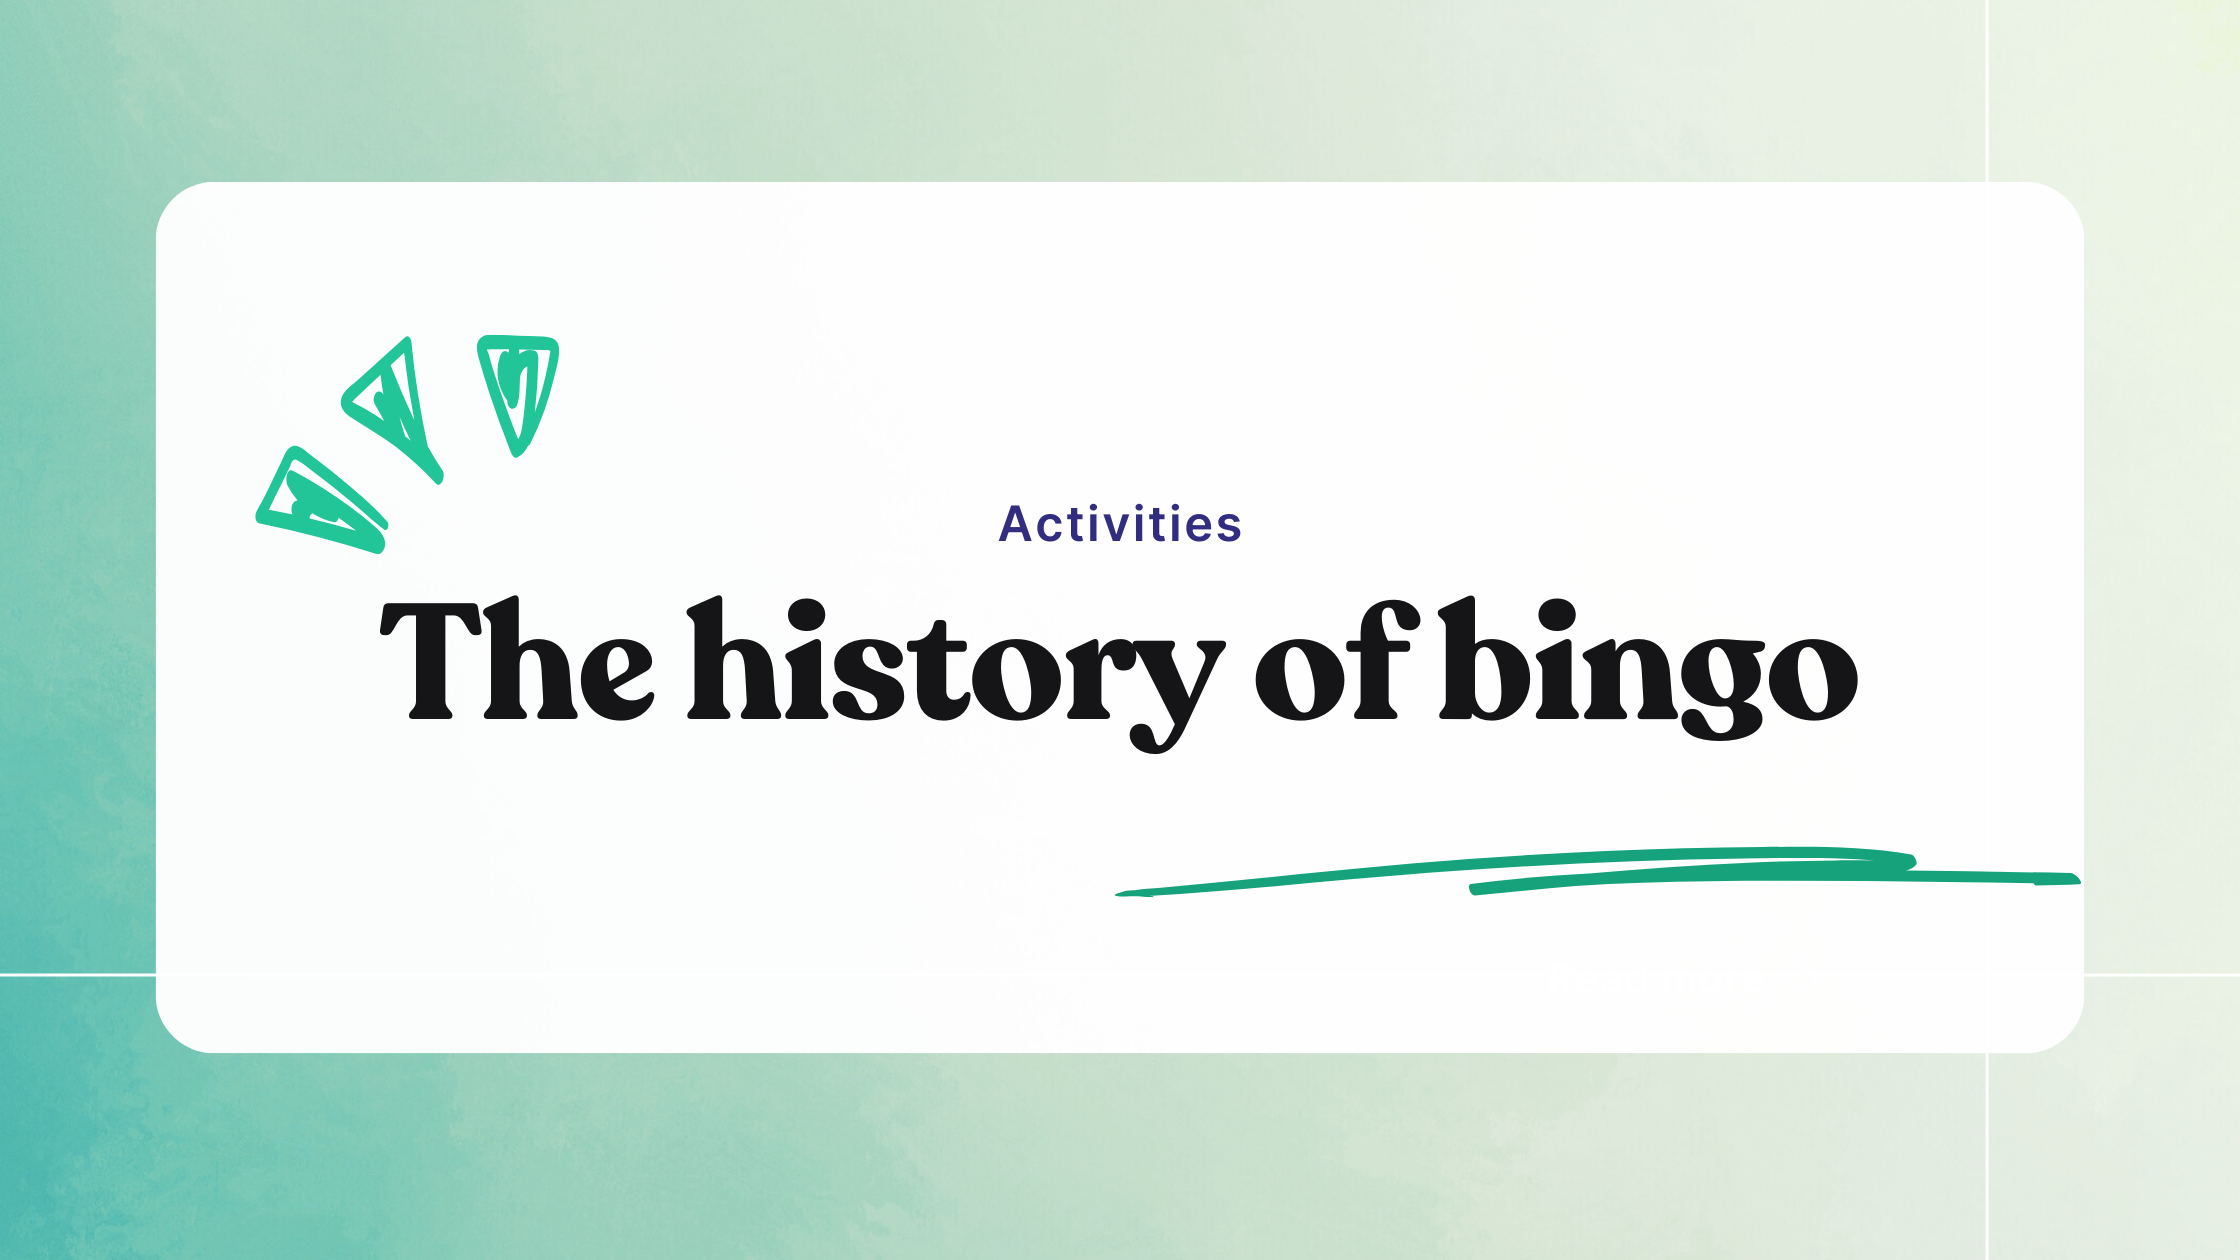 The history of bingo